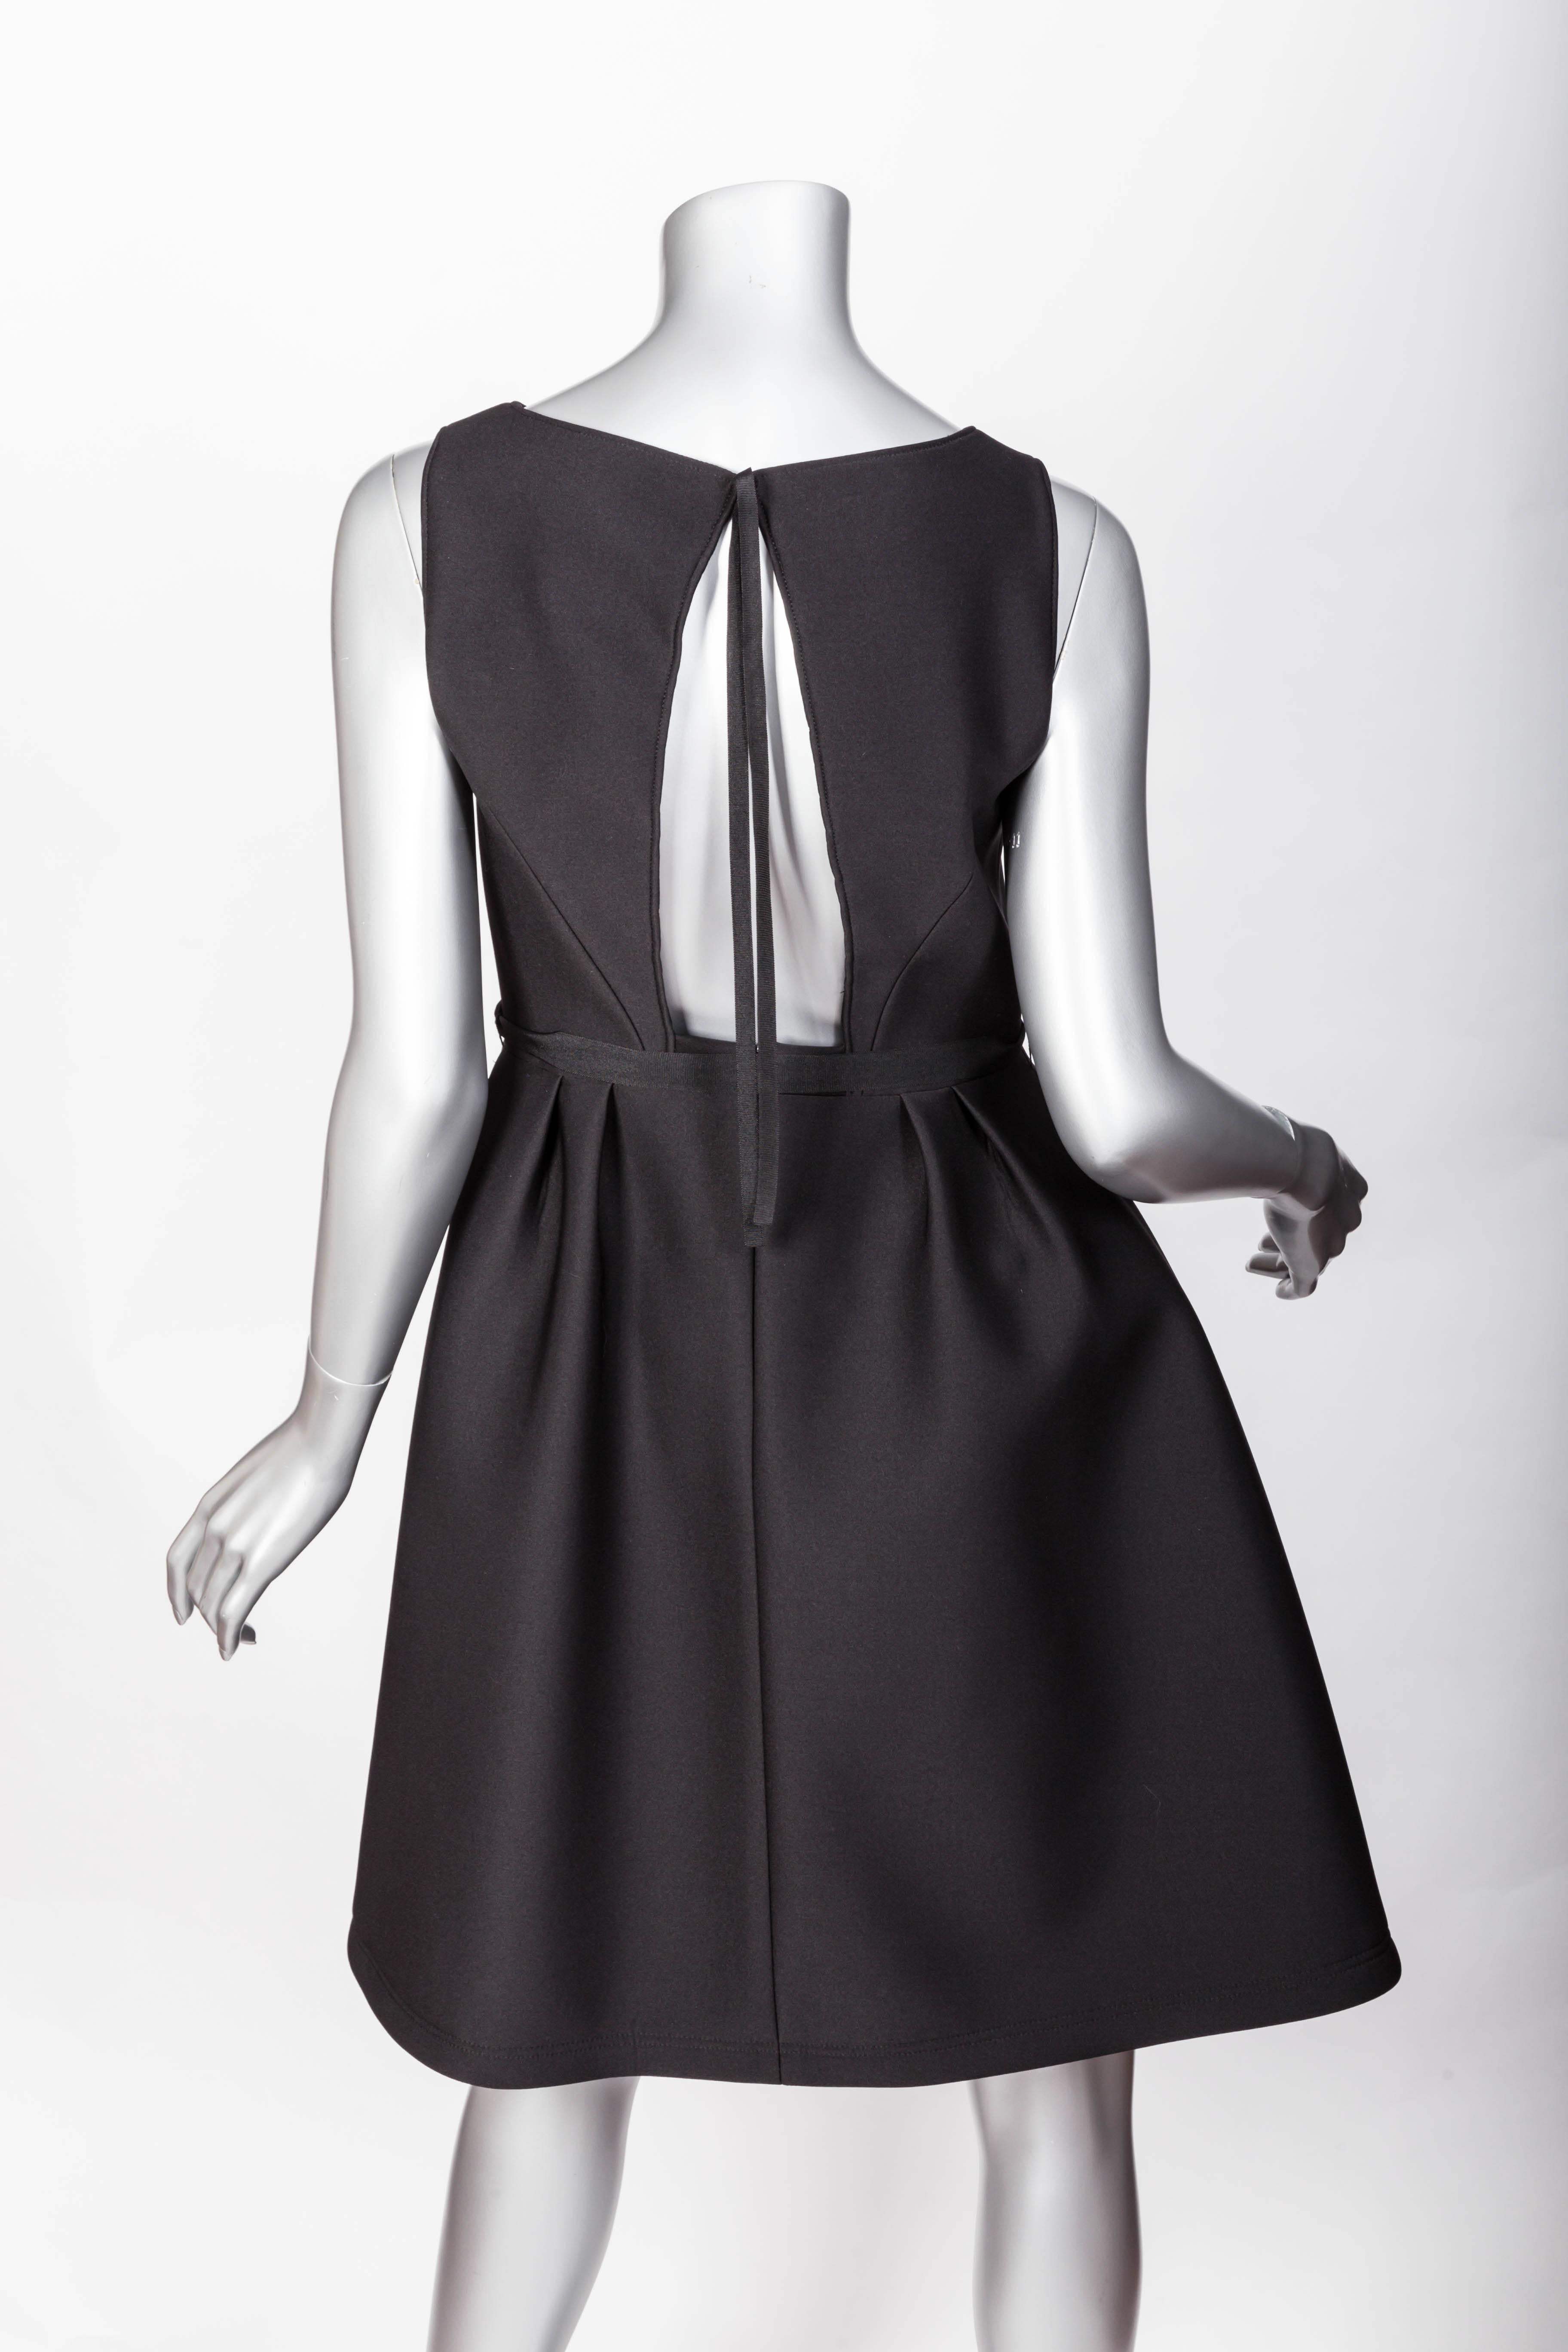 Black Katie Ermilio Dress Size 8